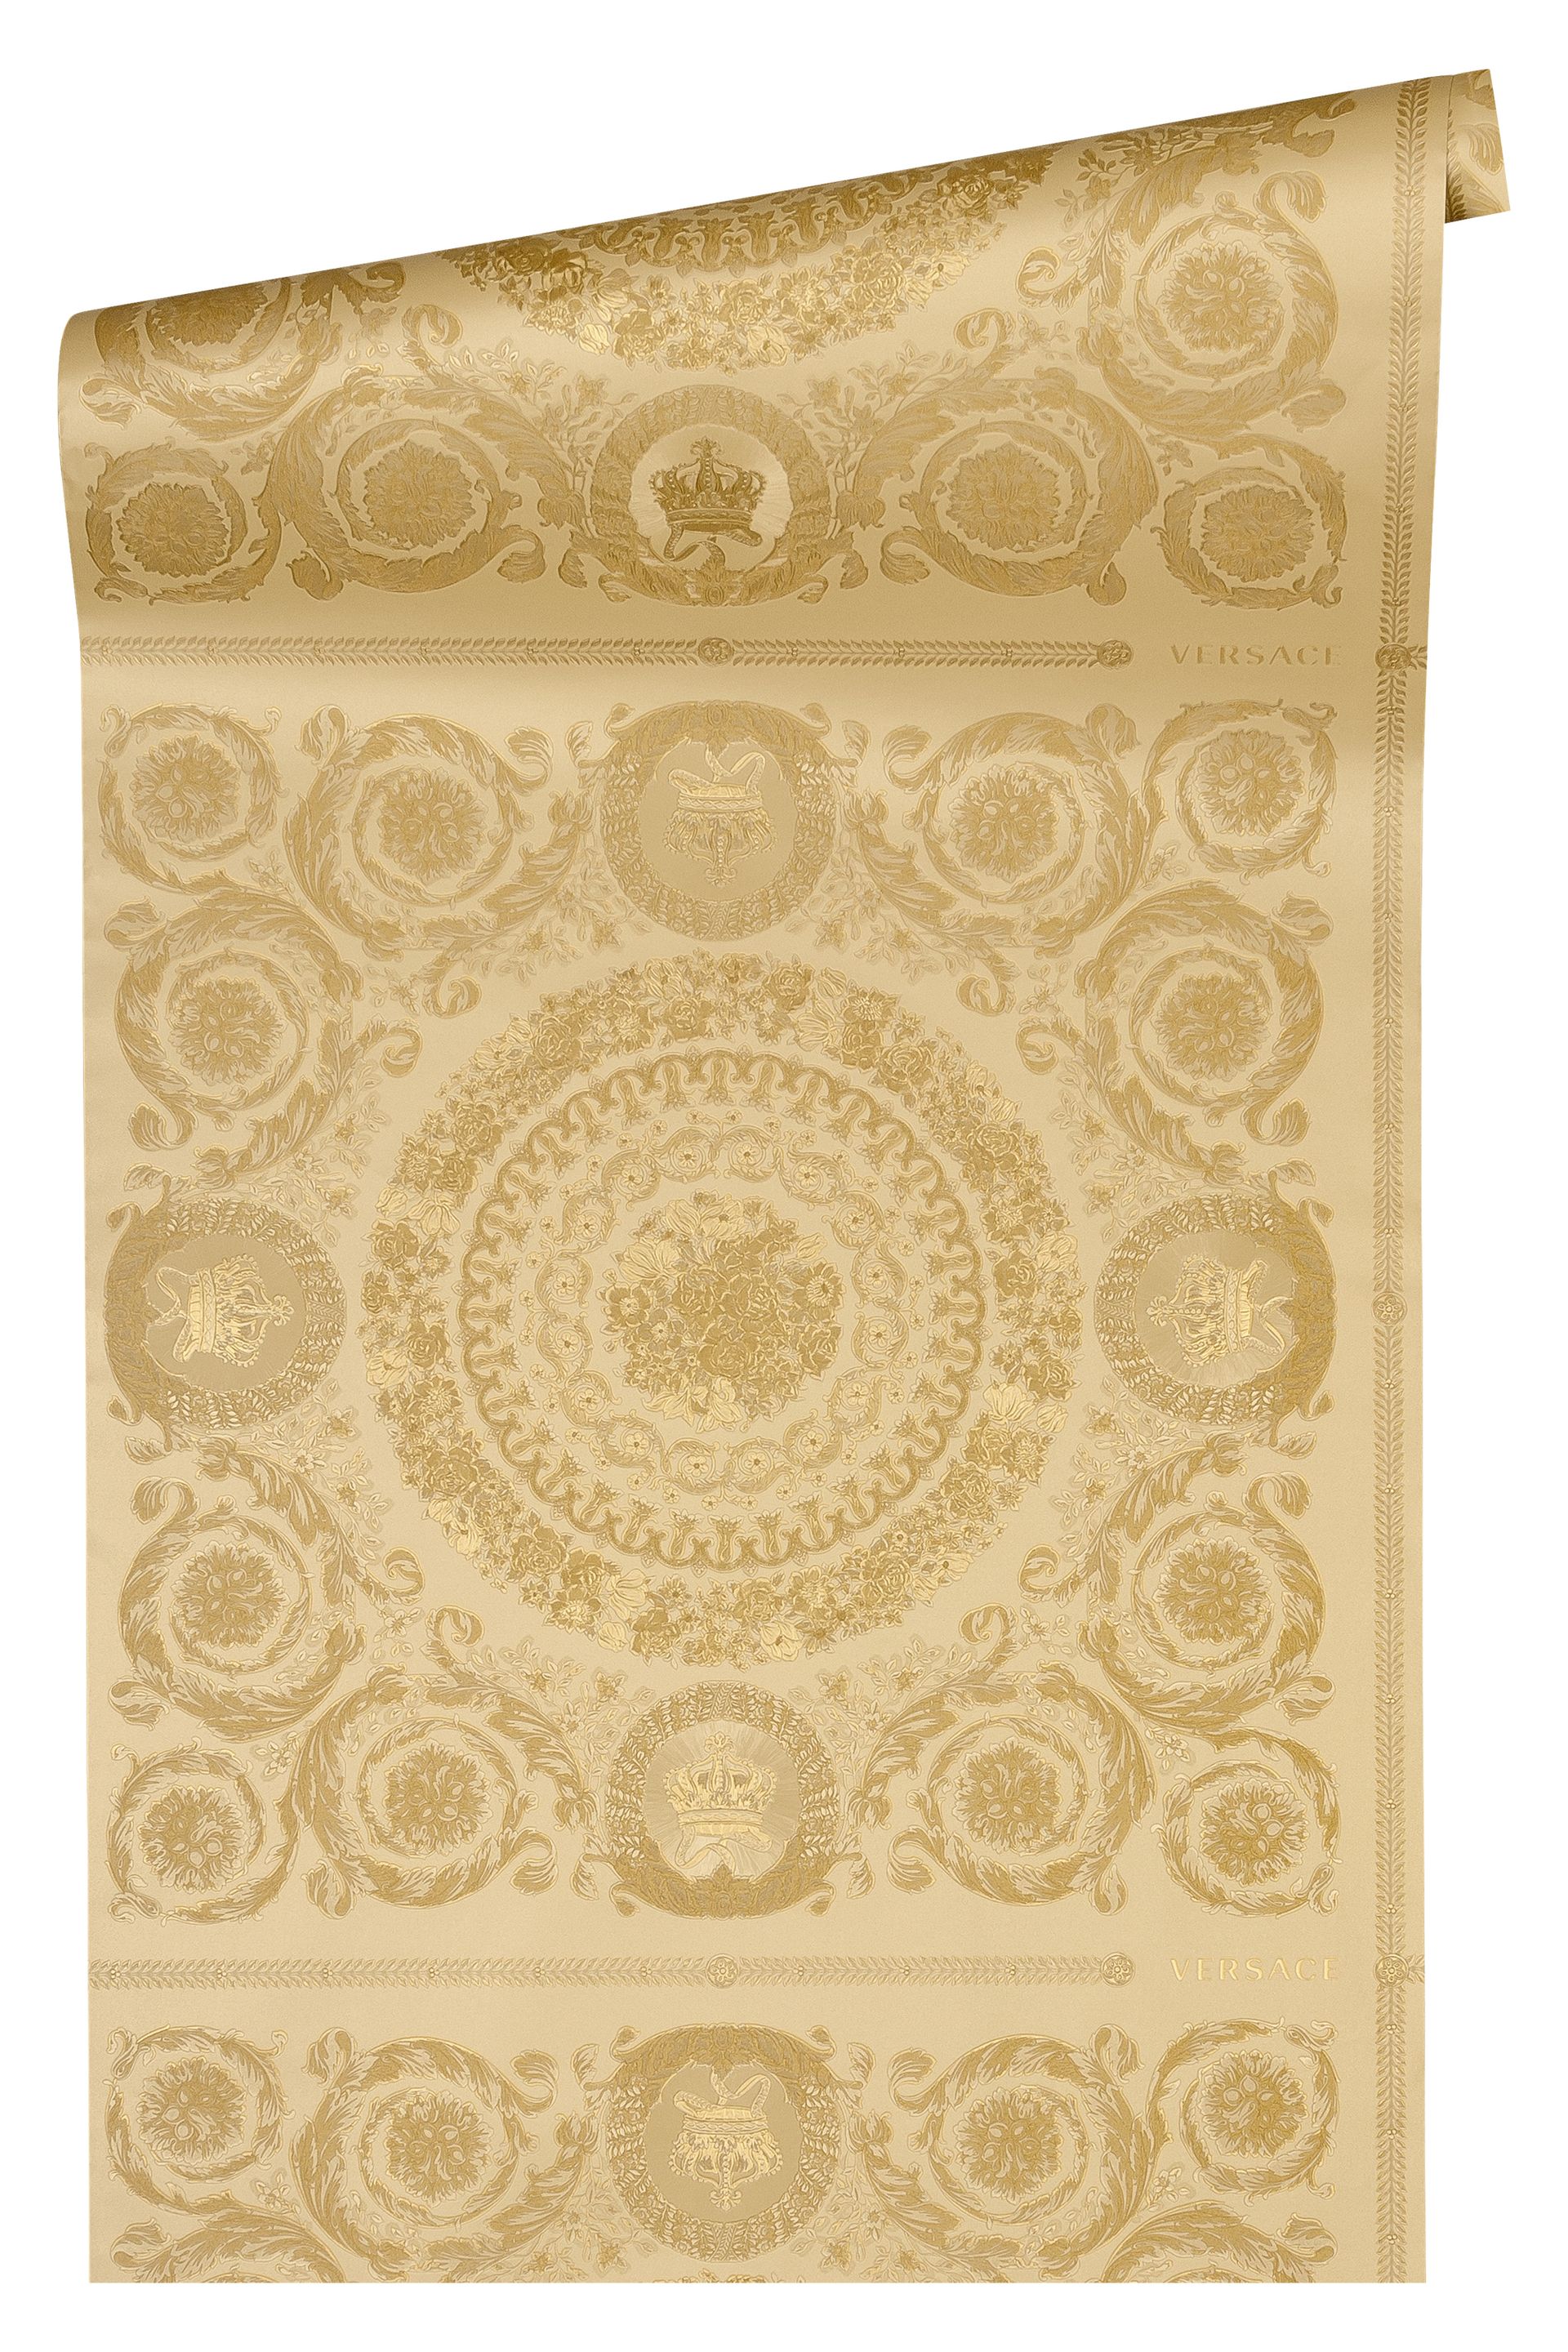 Versace wallpaper Versace 4, Barock Tapete, gold, gelb 370554